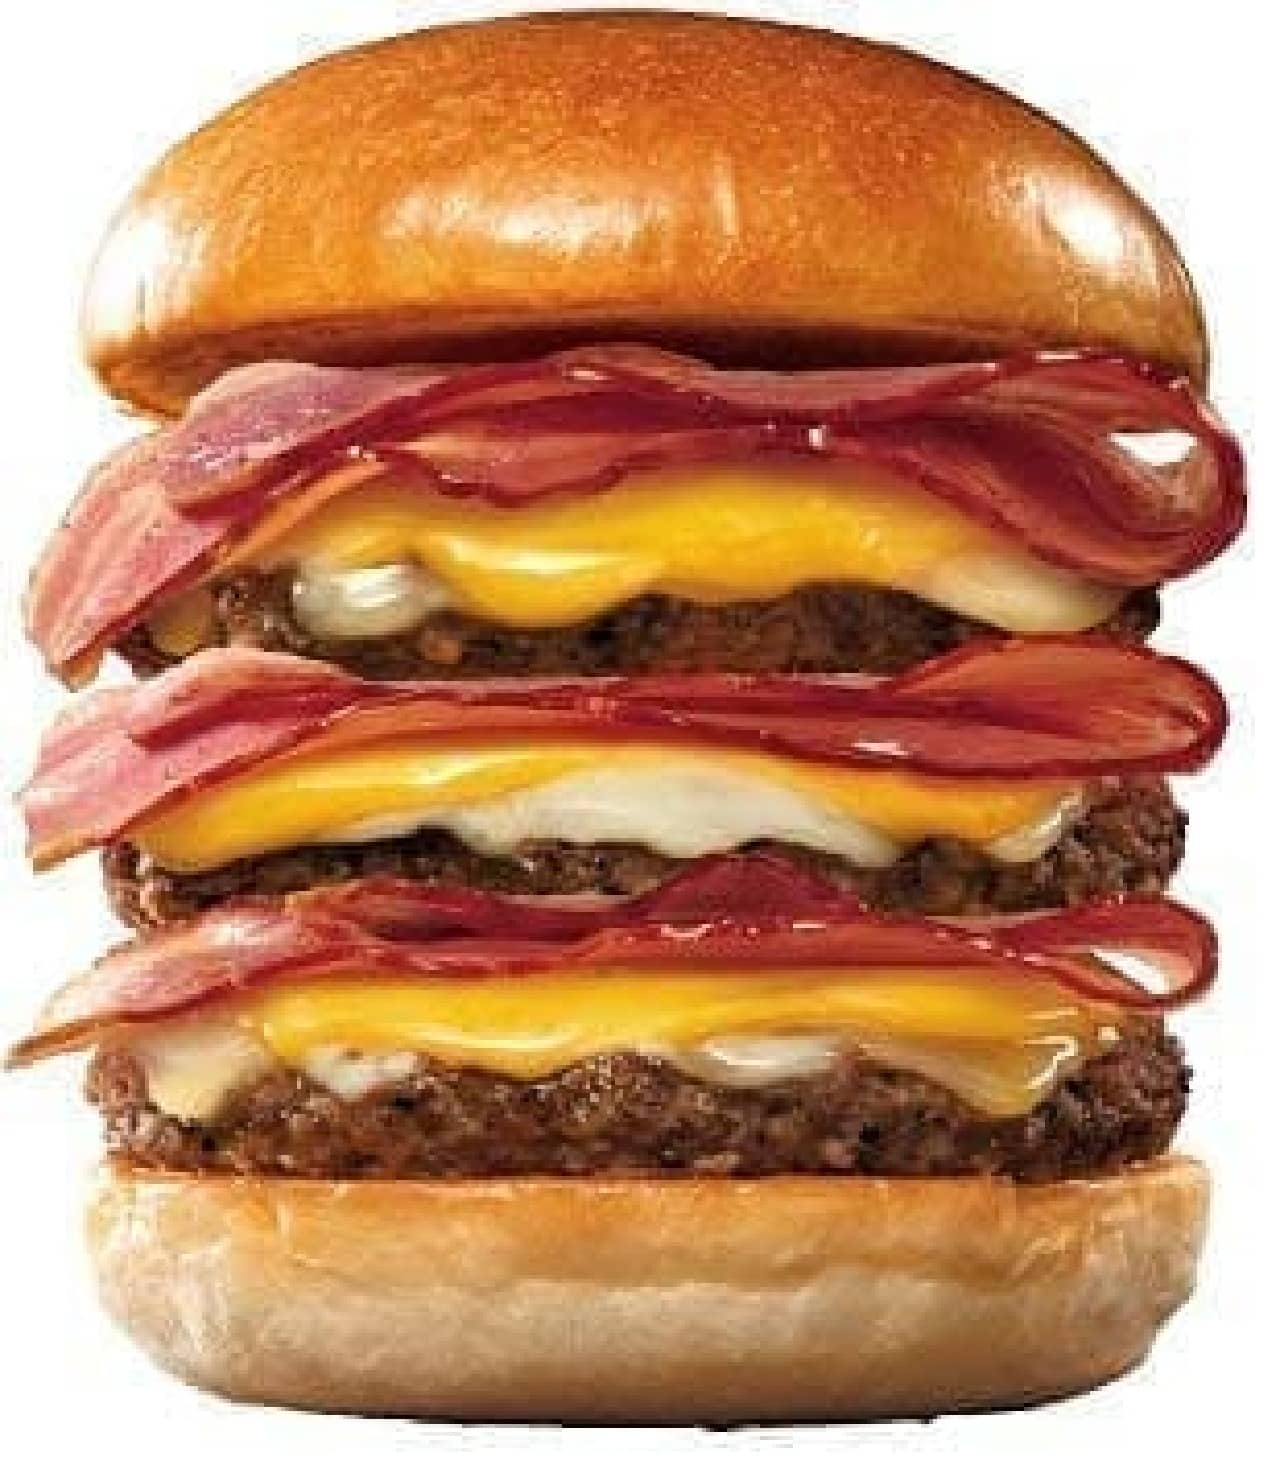 Lotteria "Triple Bacon Triple Exquisite Cheeseburger"